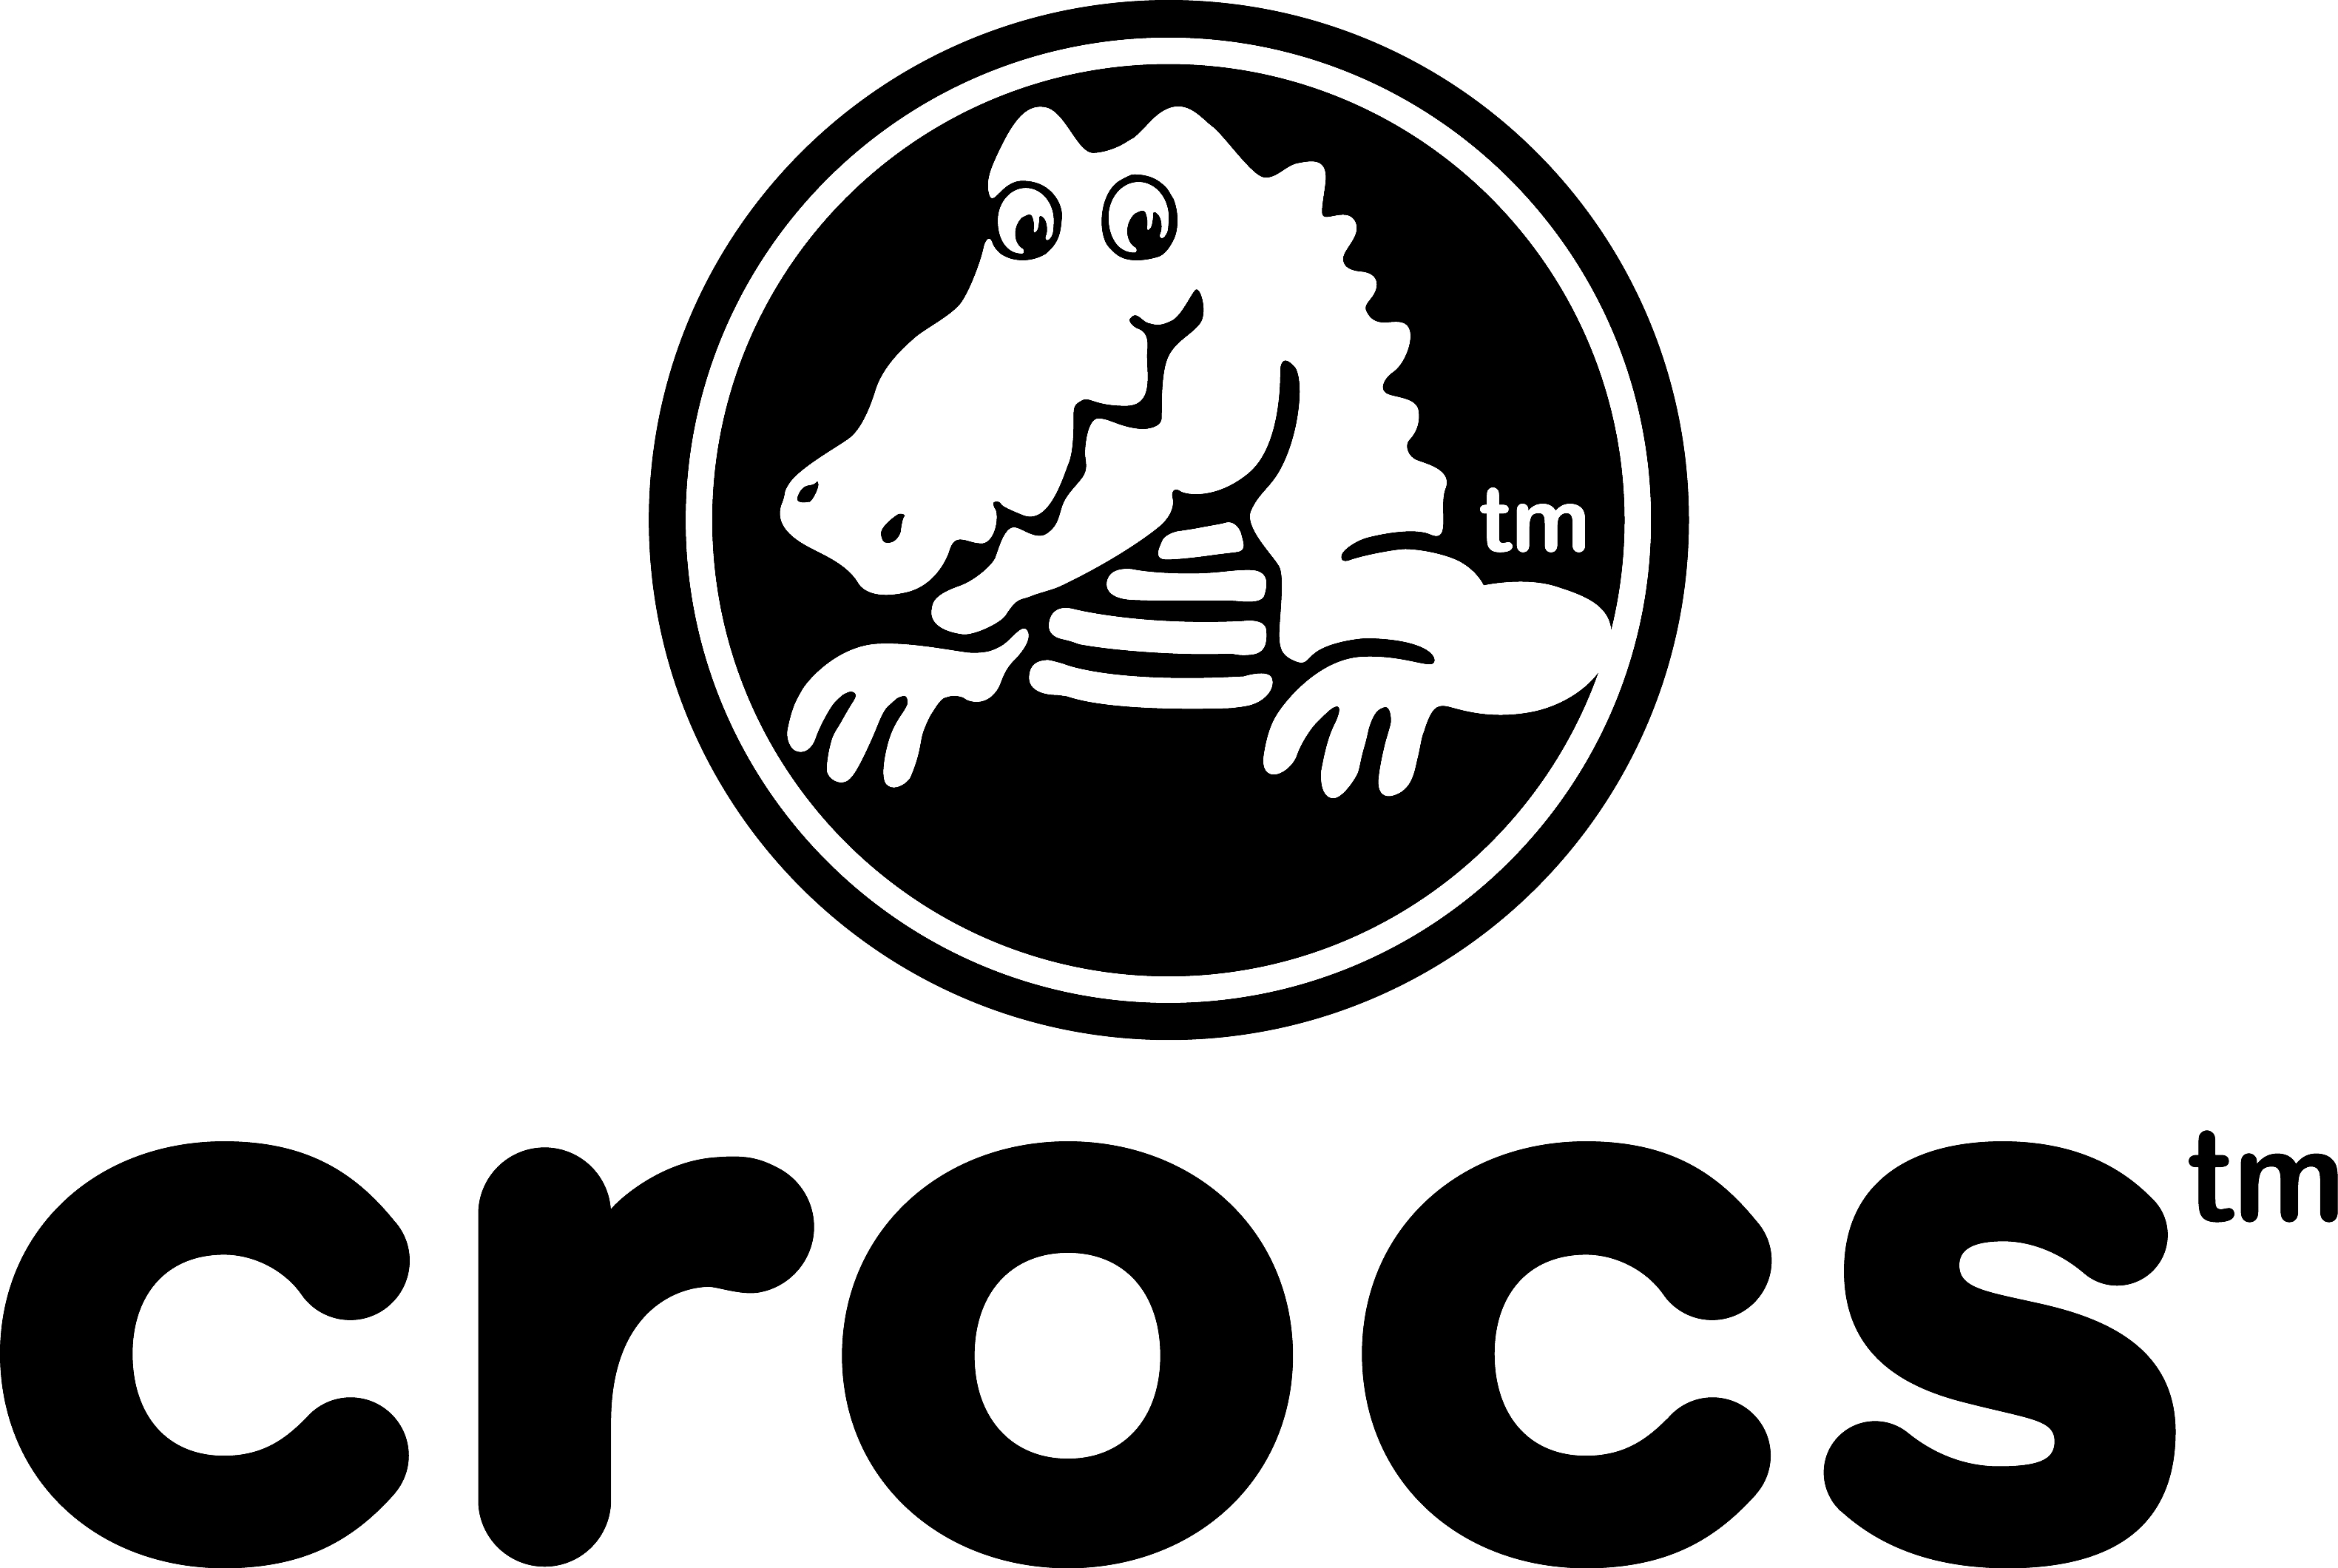 Crocs and Crocodile Logo transparent PNG.